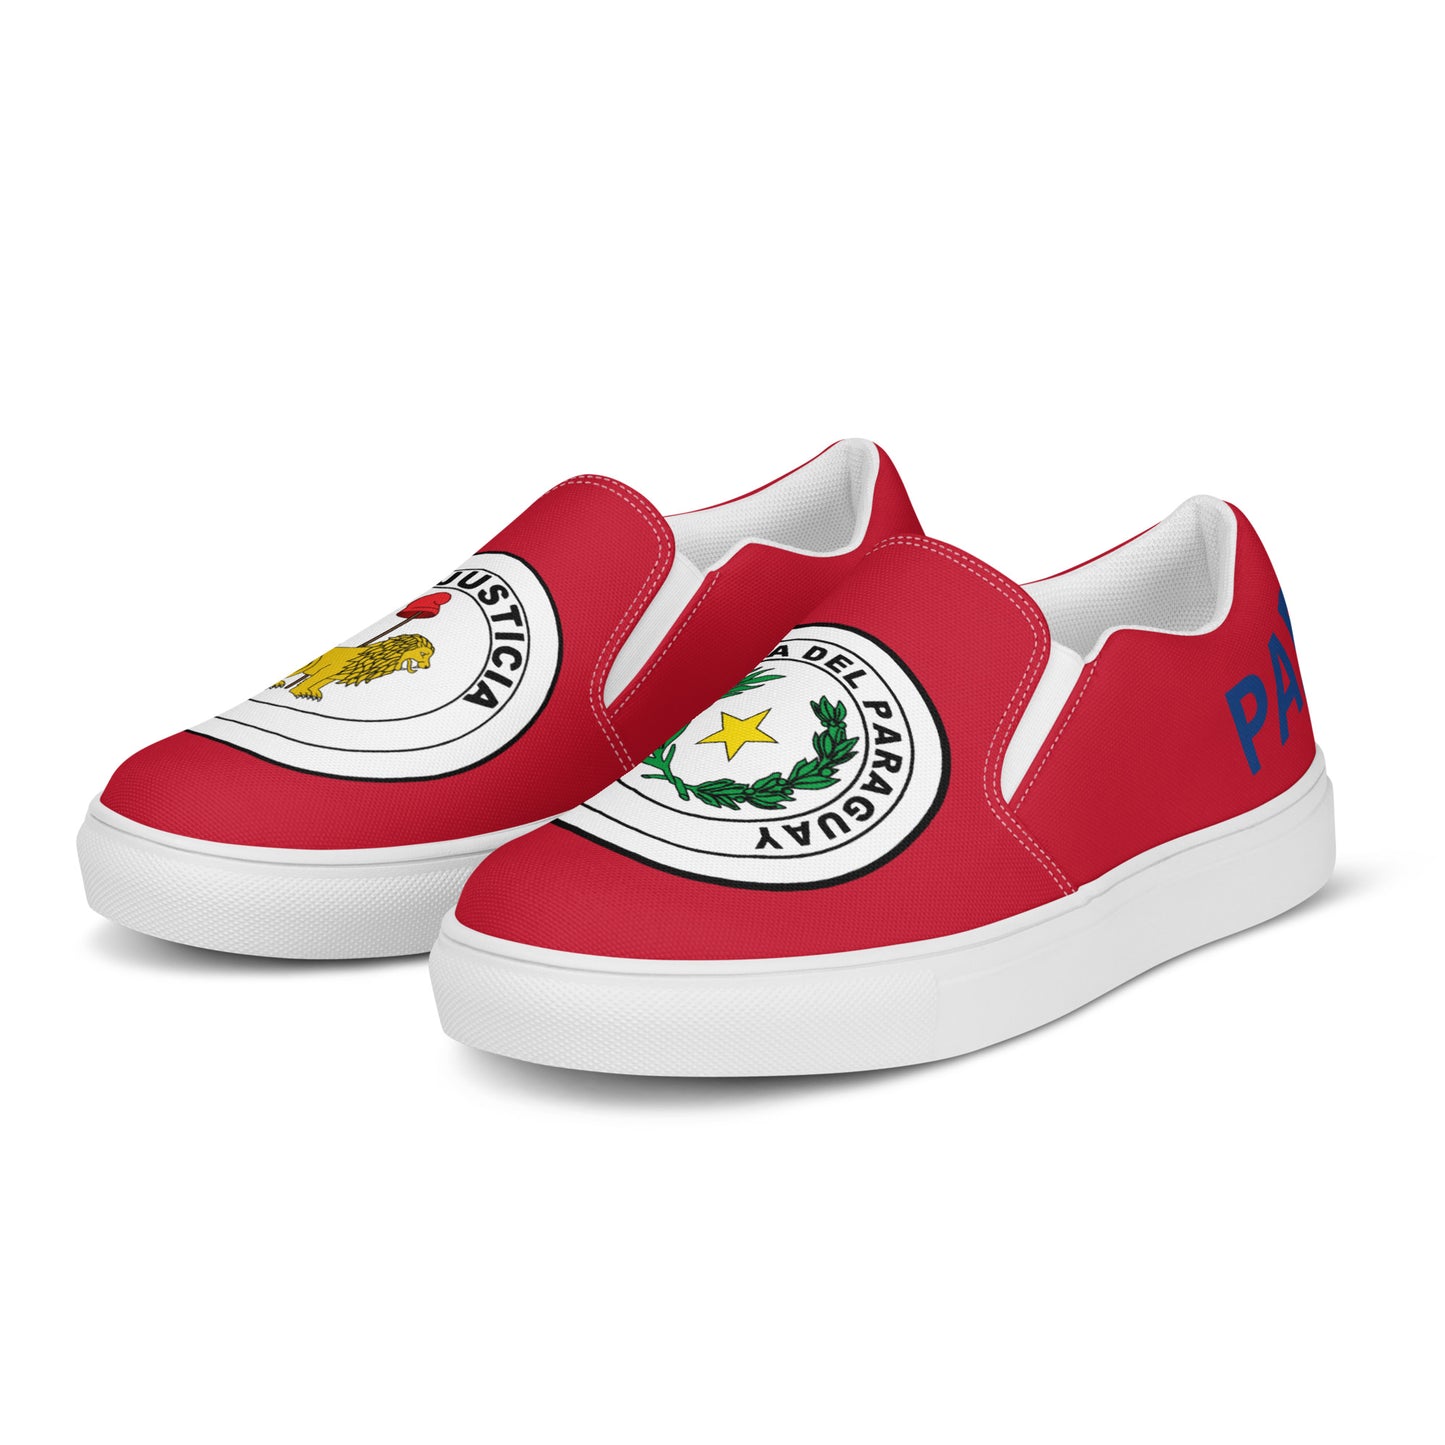 Paraguay - Hombre - Rojo - Zapatos Slip-on